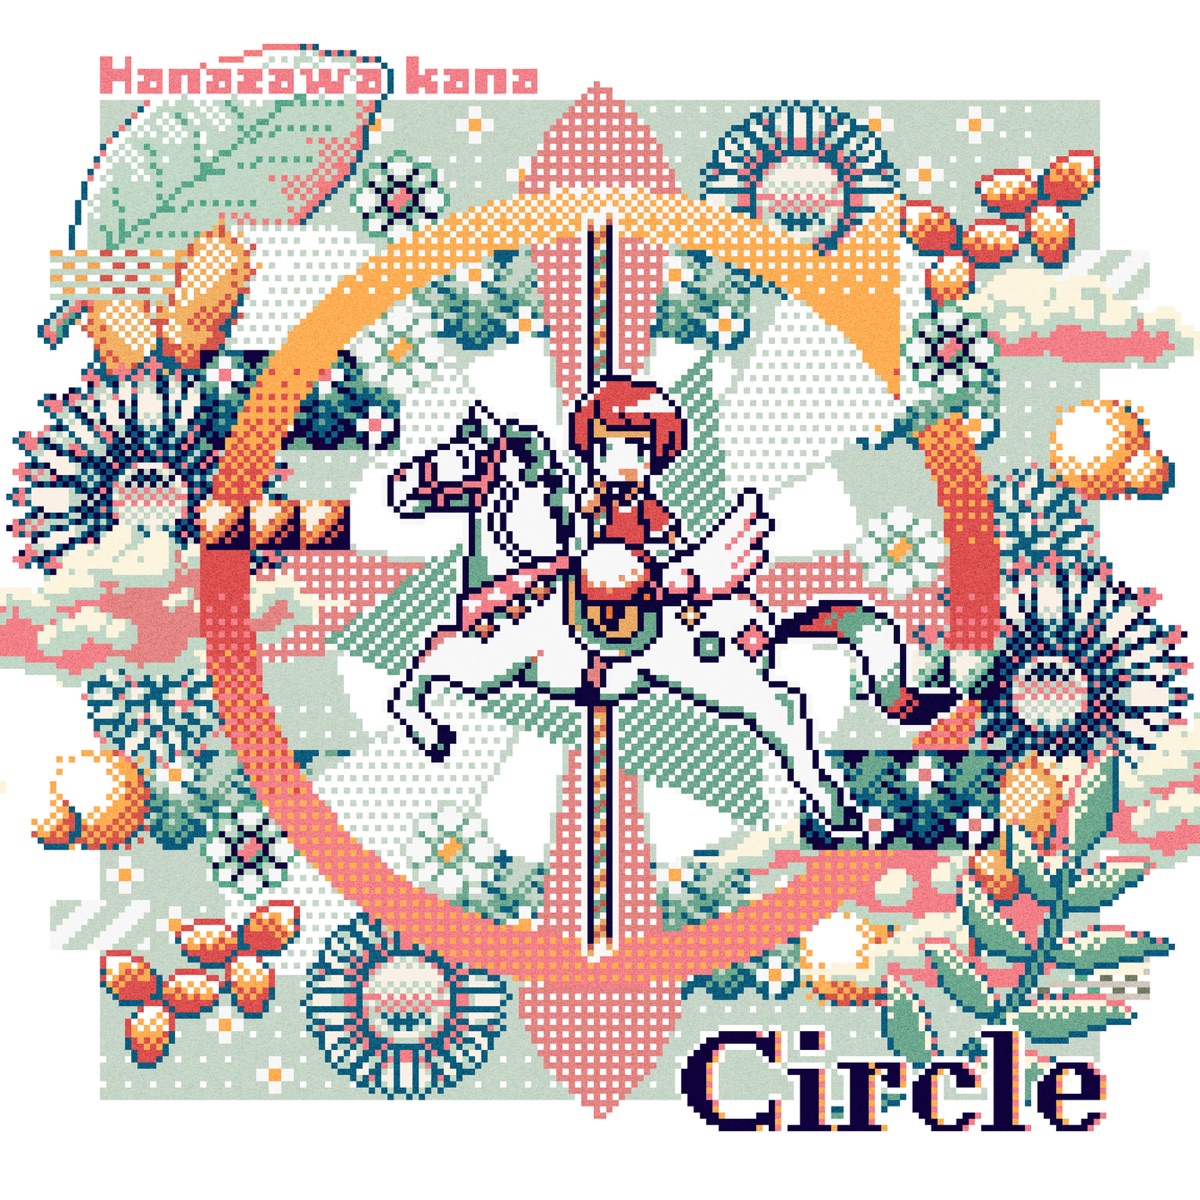 Cover art for『Kana Hanazawa - Circle』from the release『Circle』